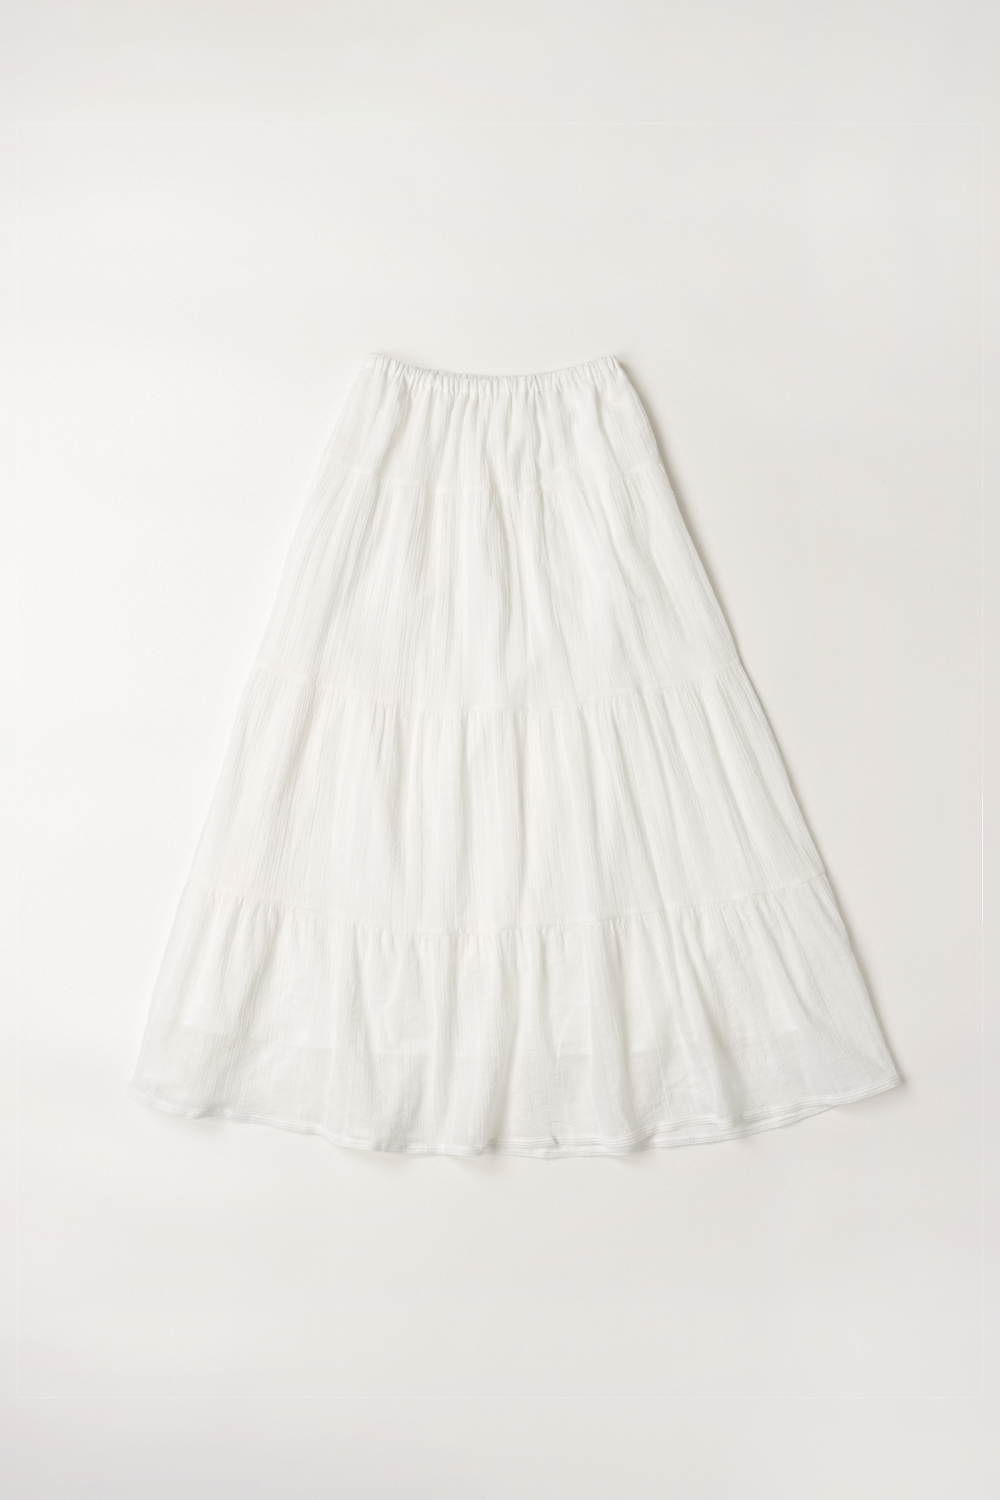 Hippie Girls  Skirt (White) 3차 오픈 4/26일 순차발송